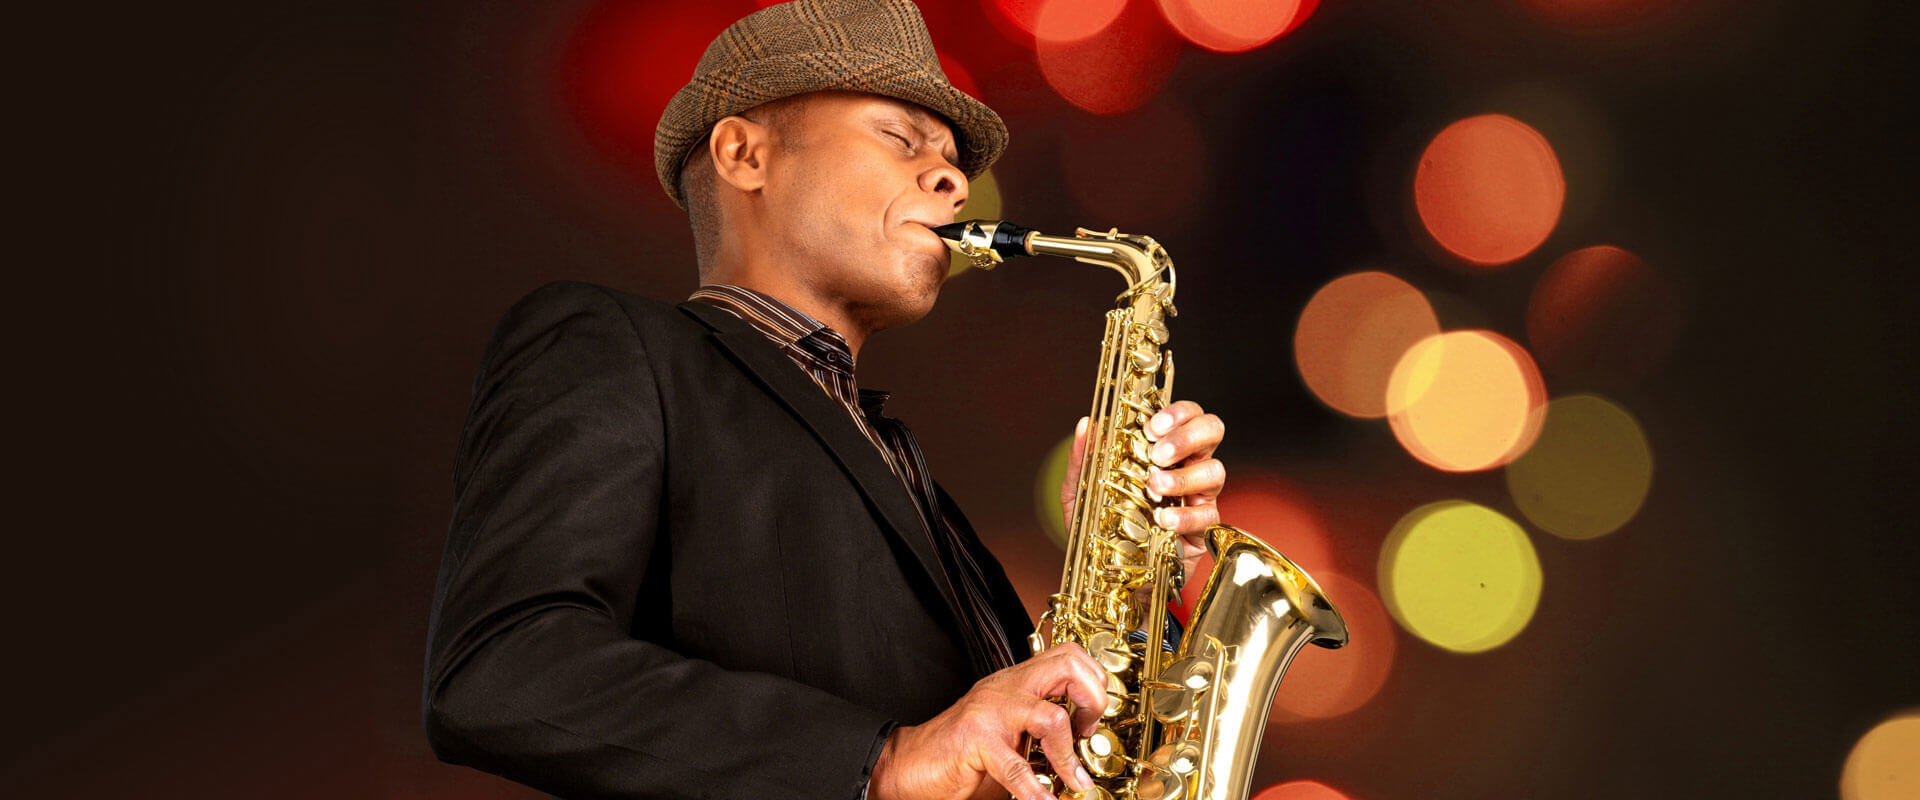 Saxophone Lessons Cincinnati, OH